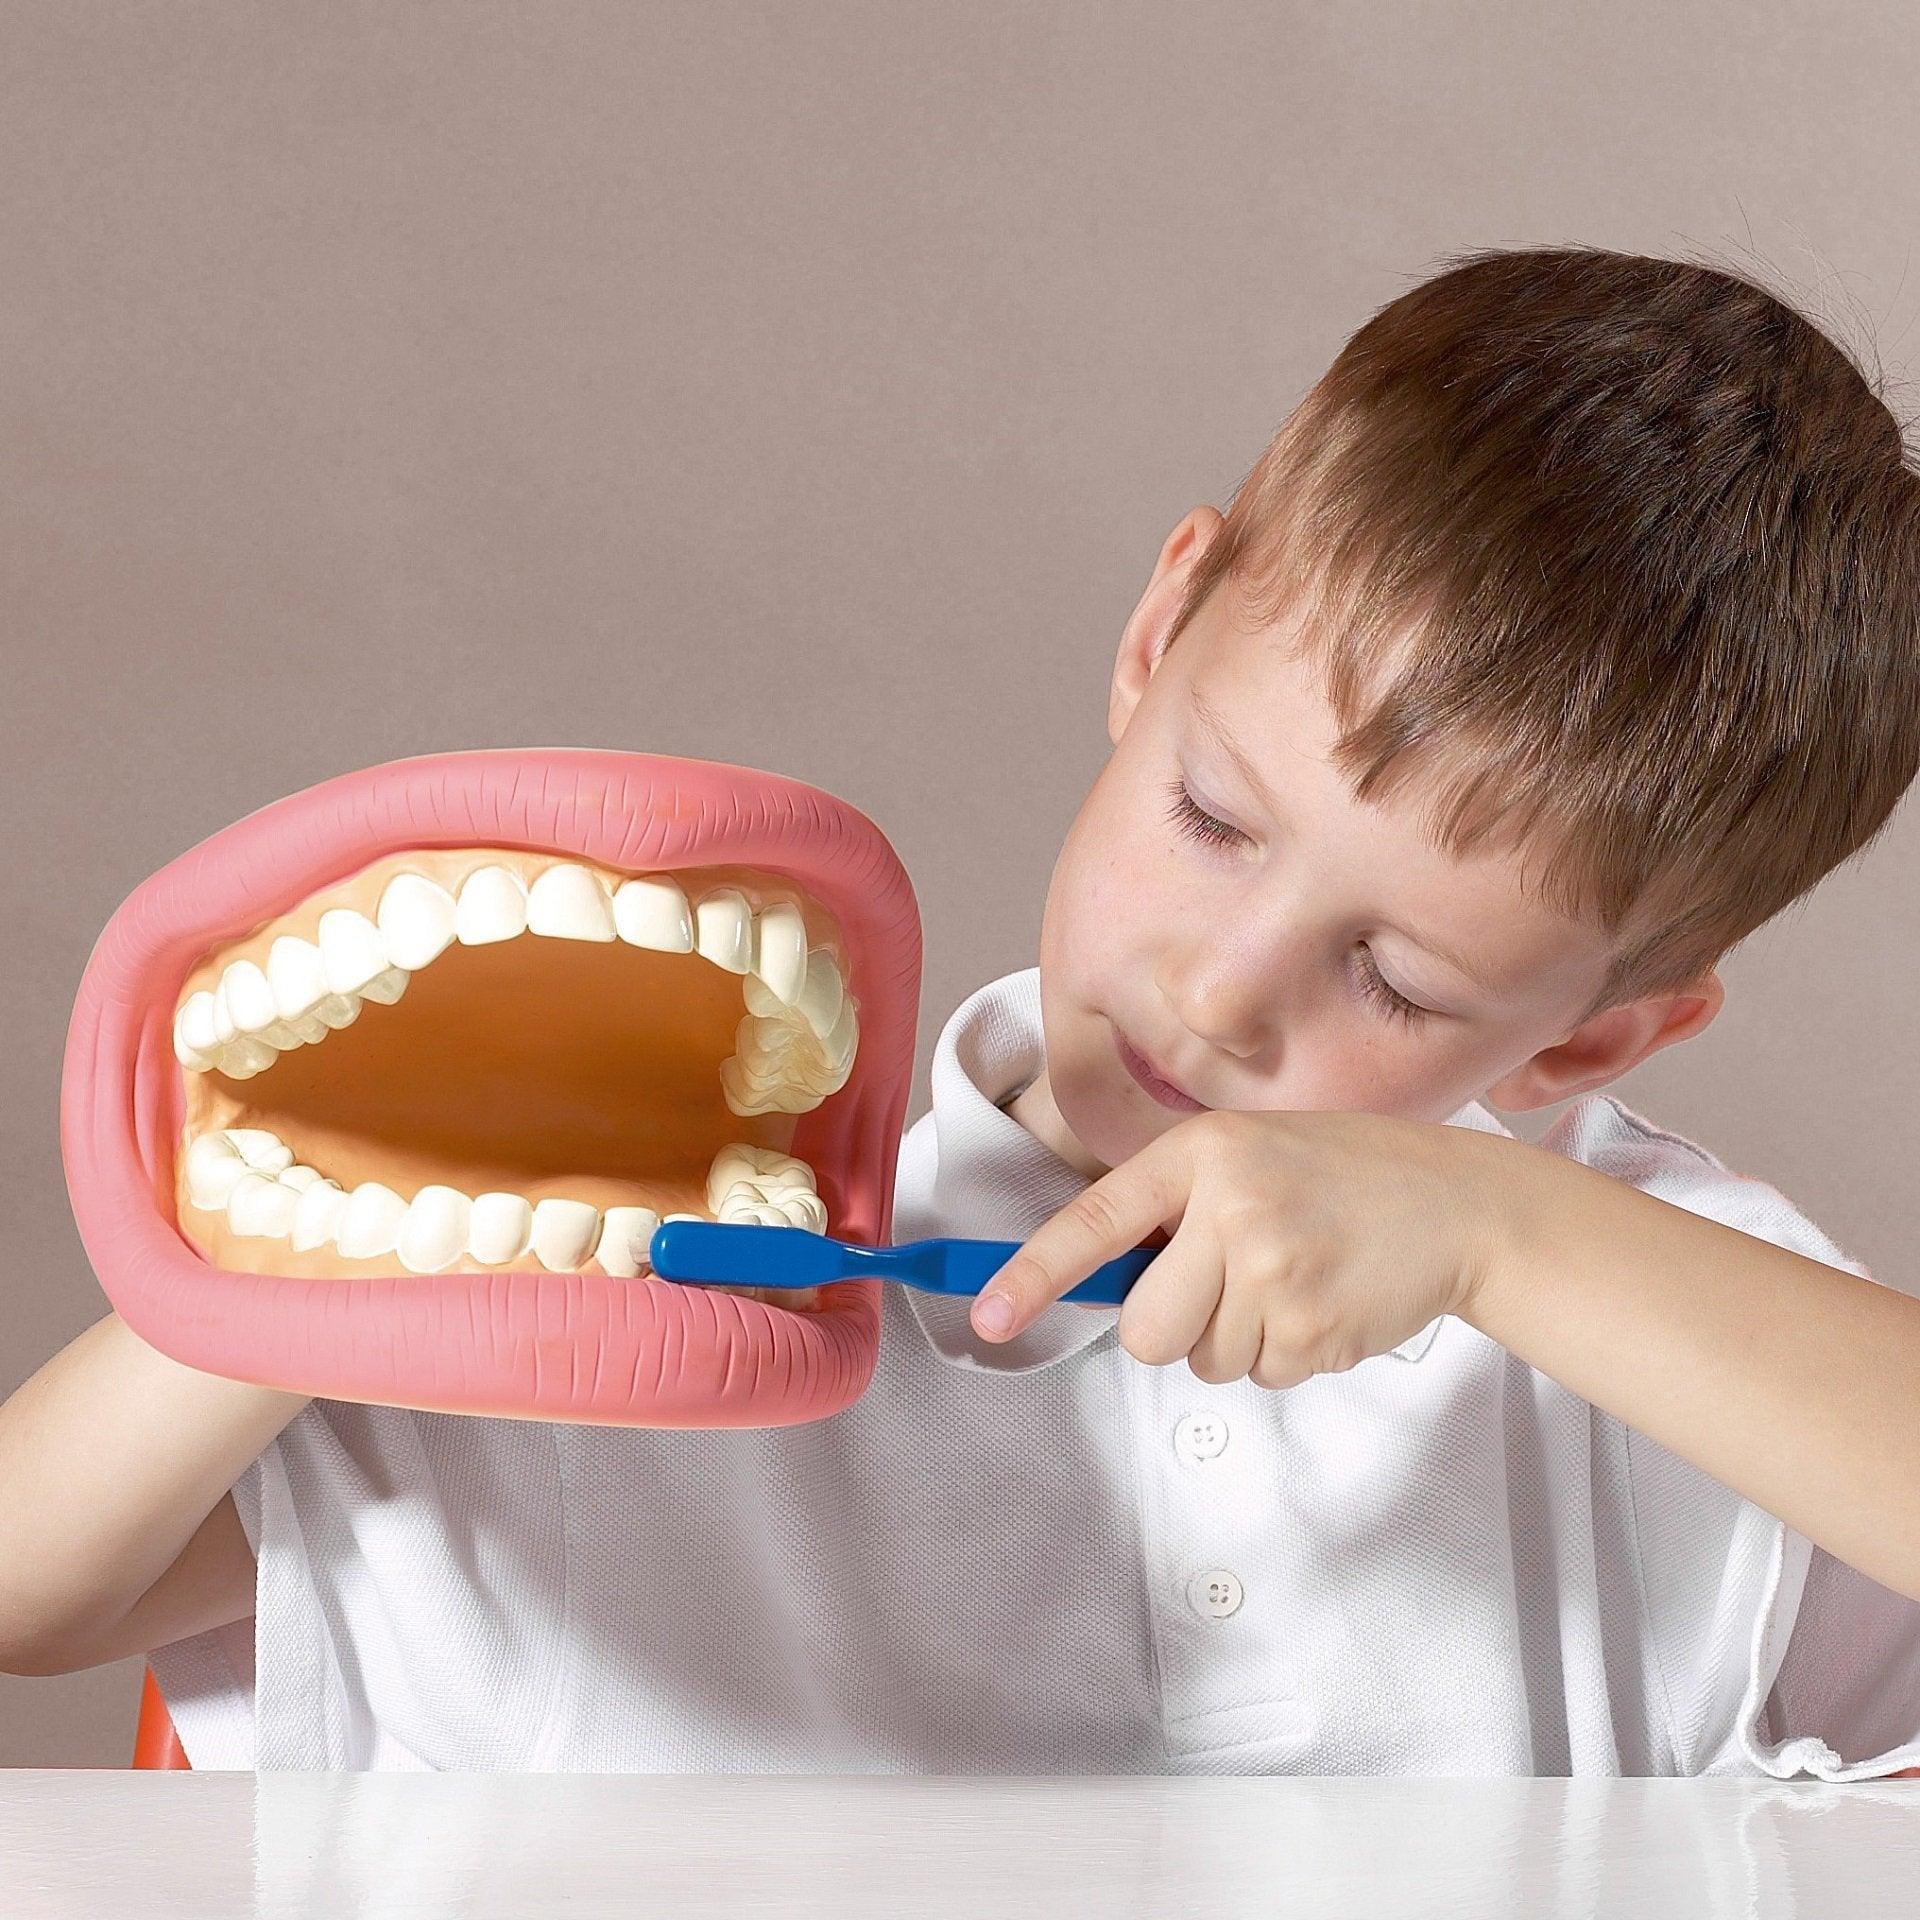 TickiT: Giant Teeth Demonstration jaw model